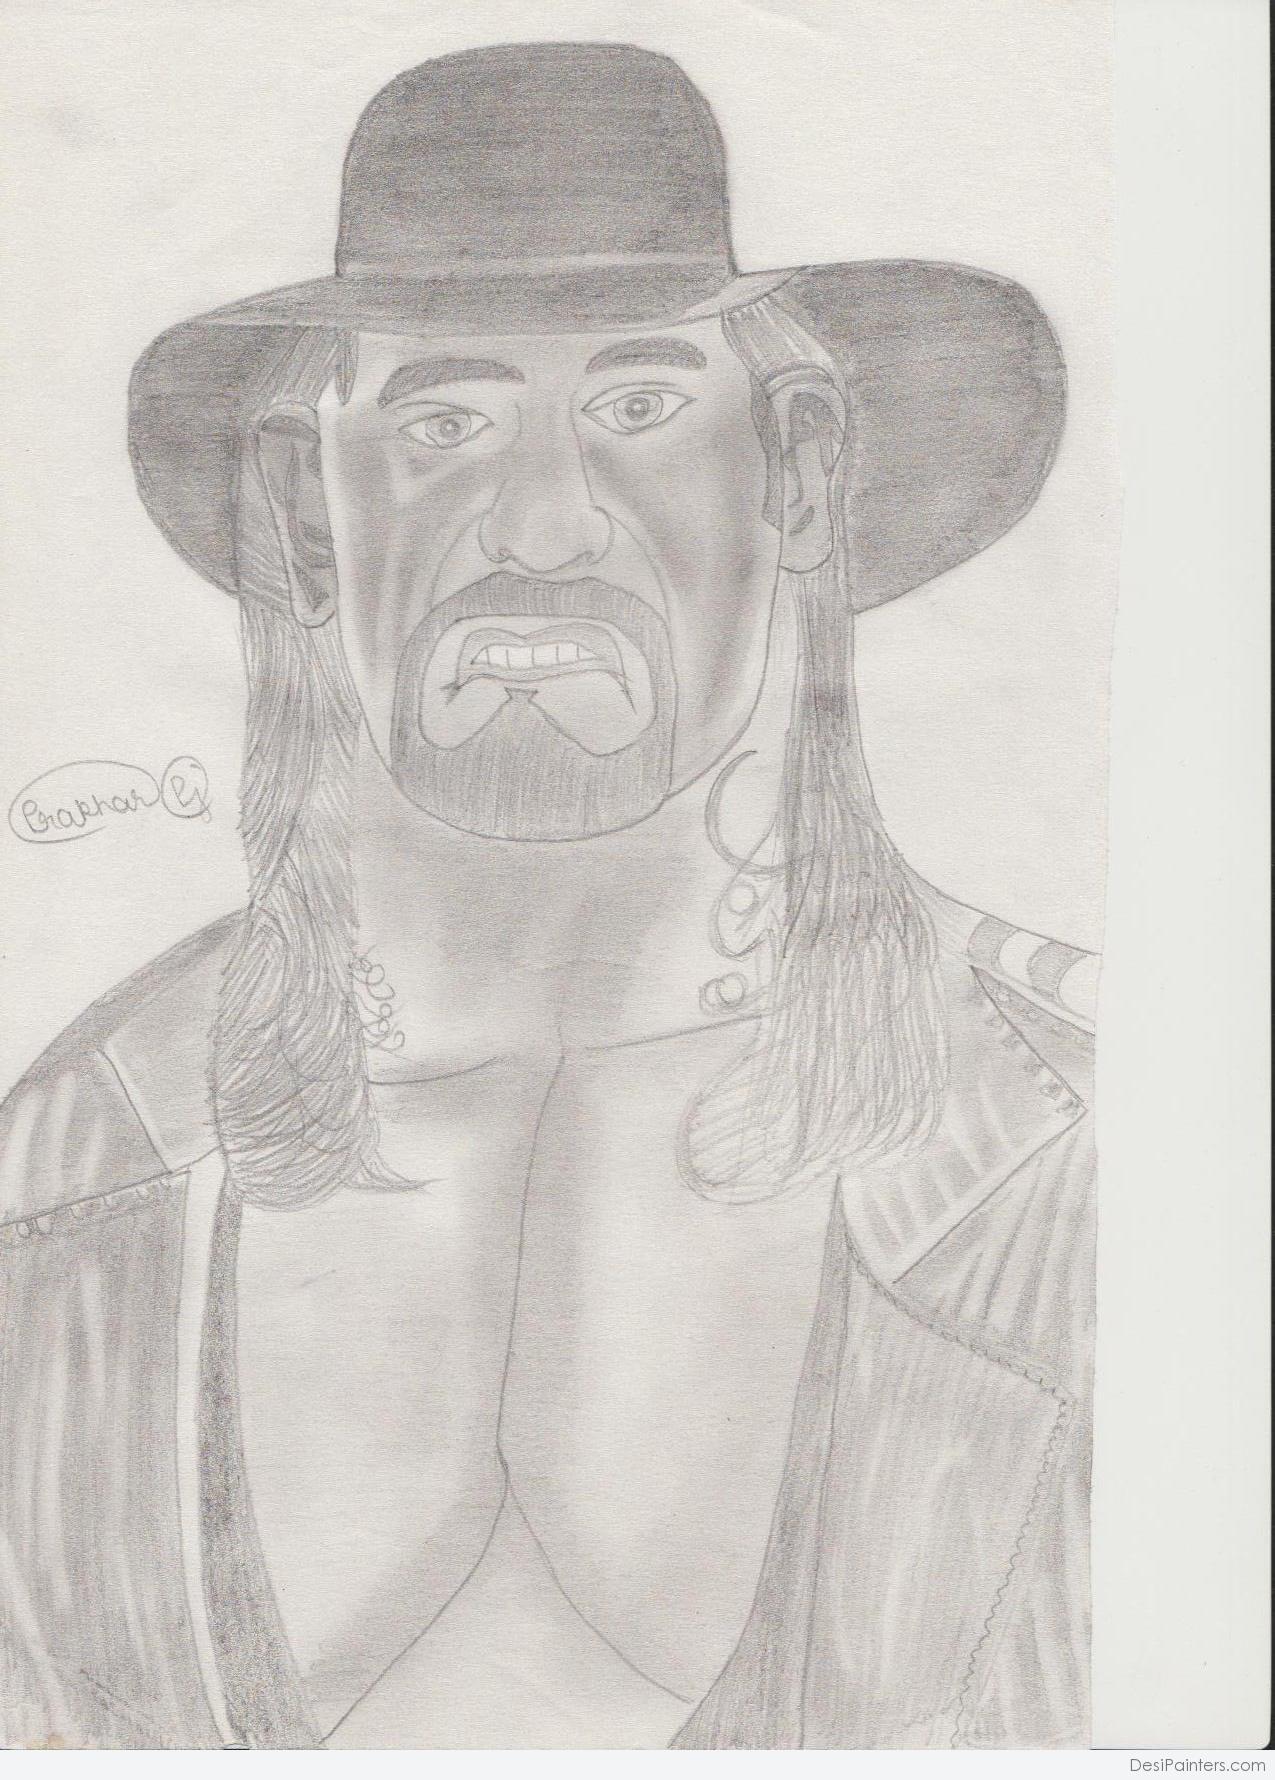 WWE Wrestler The Undertaker | DesiPainters.com